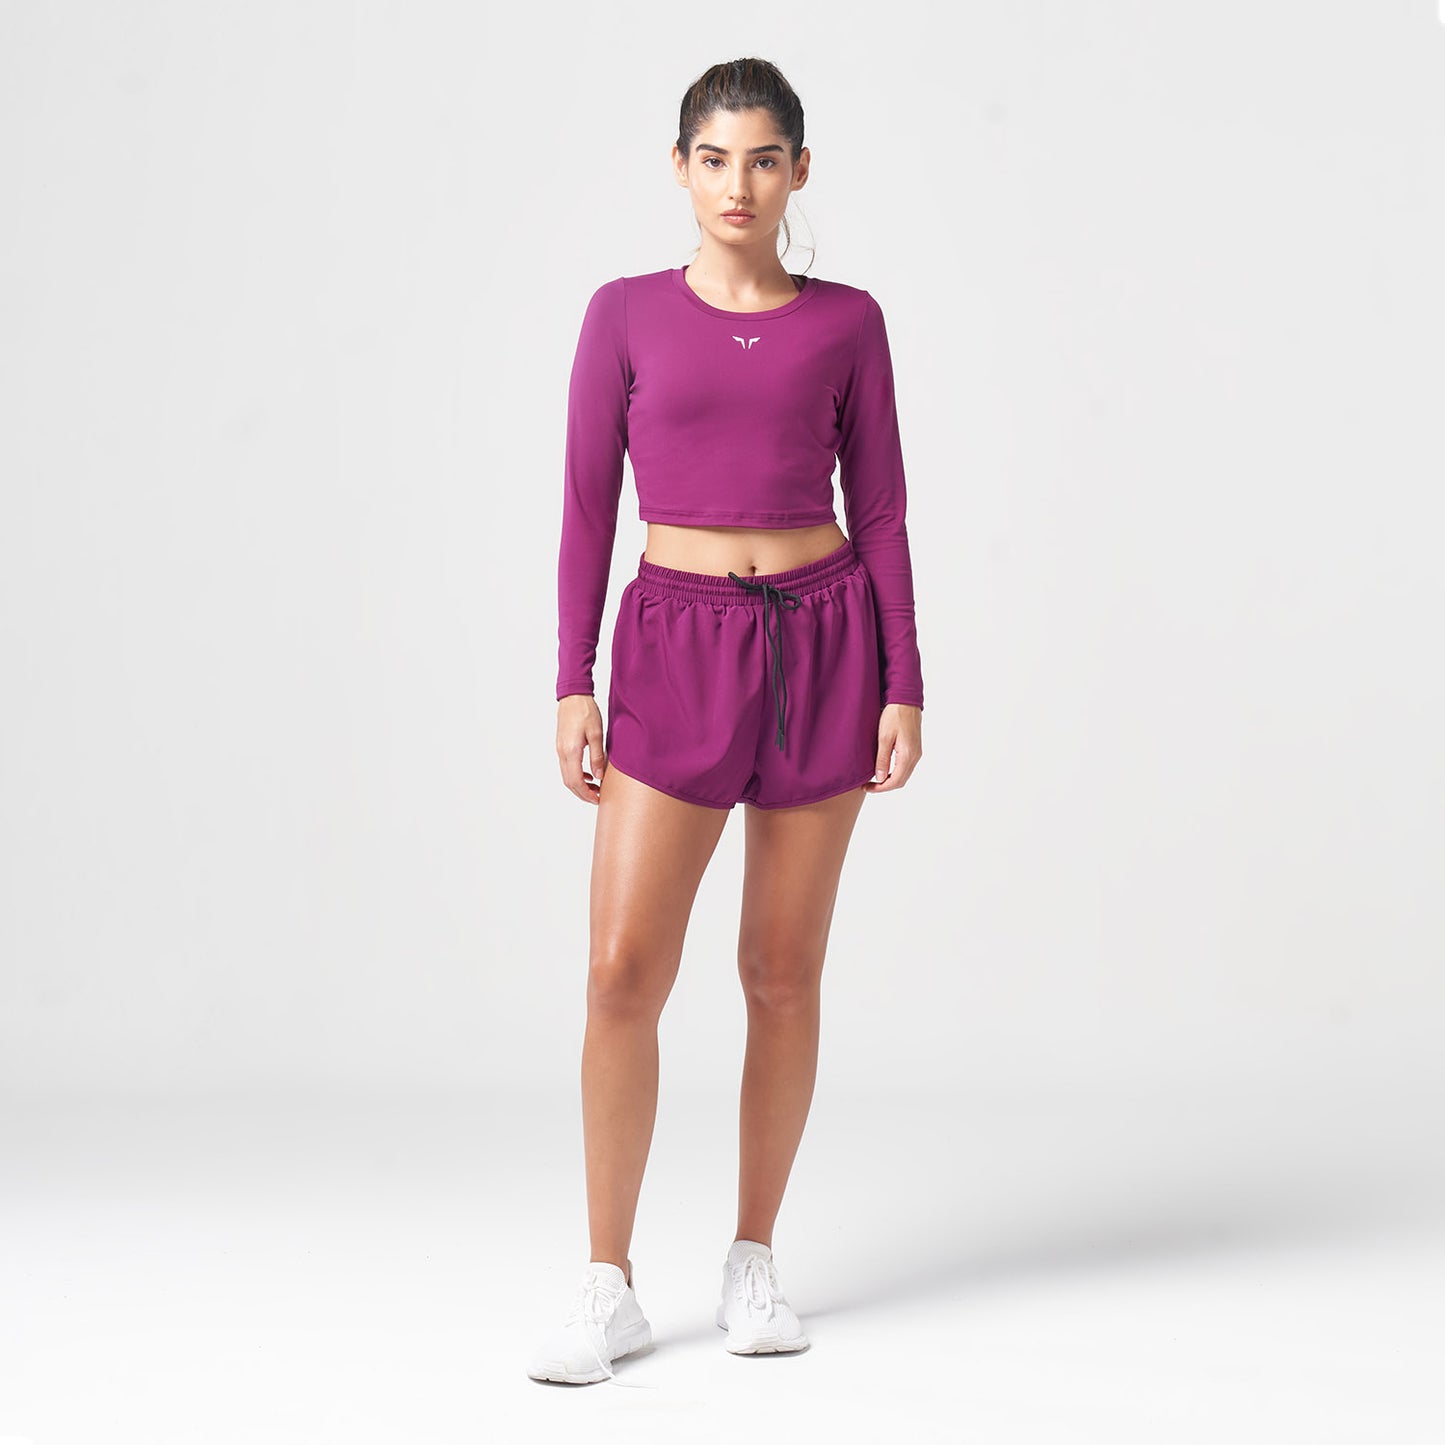 squatwolf-gym-wear-essential-full-sleeves-crop-top-dark-purple-workout-top-for-women